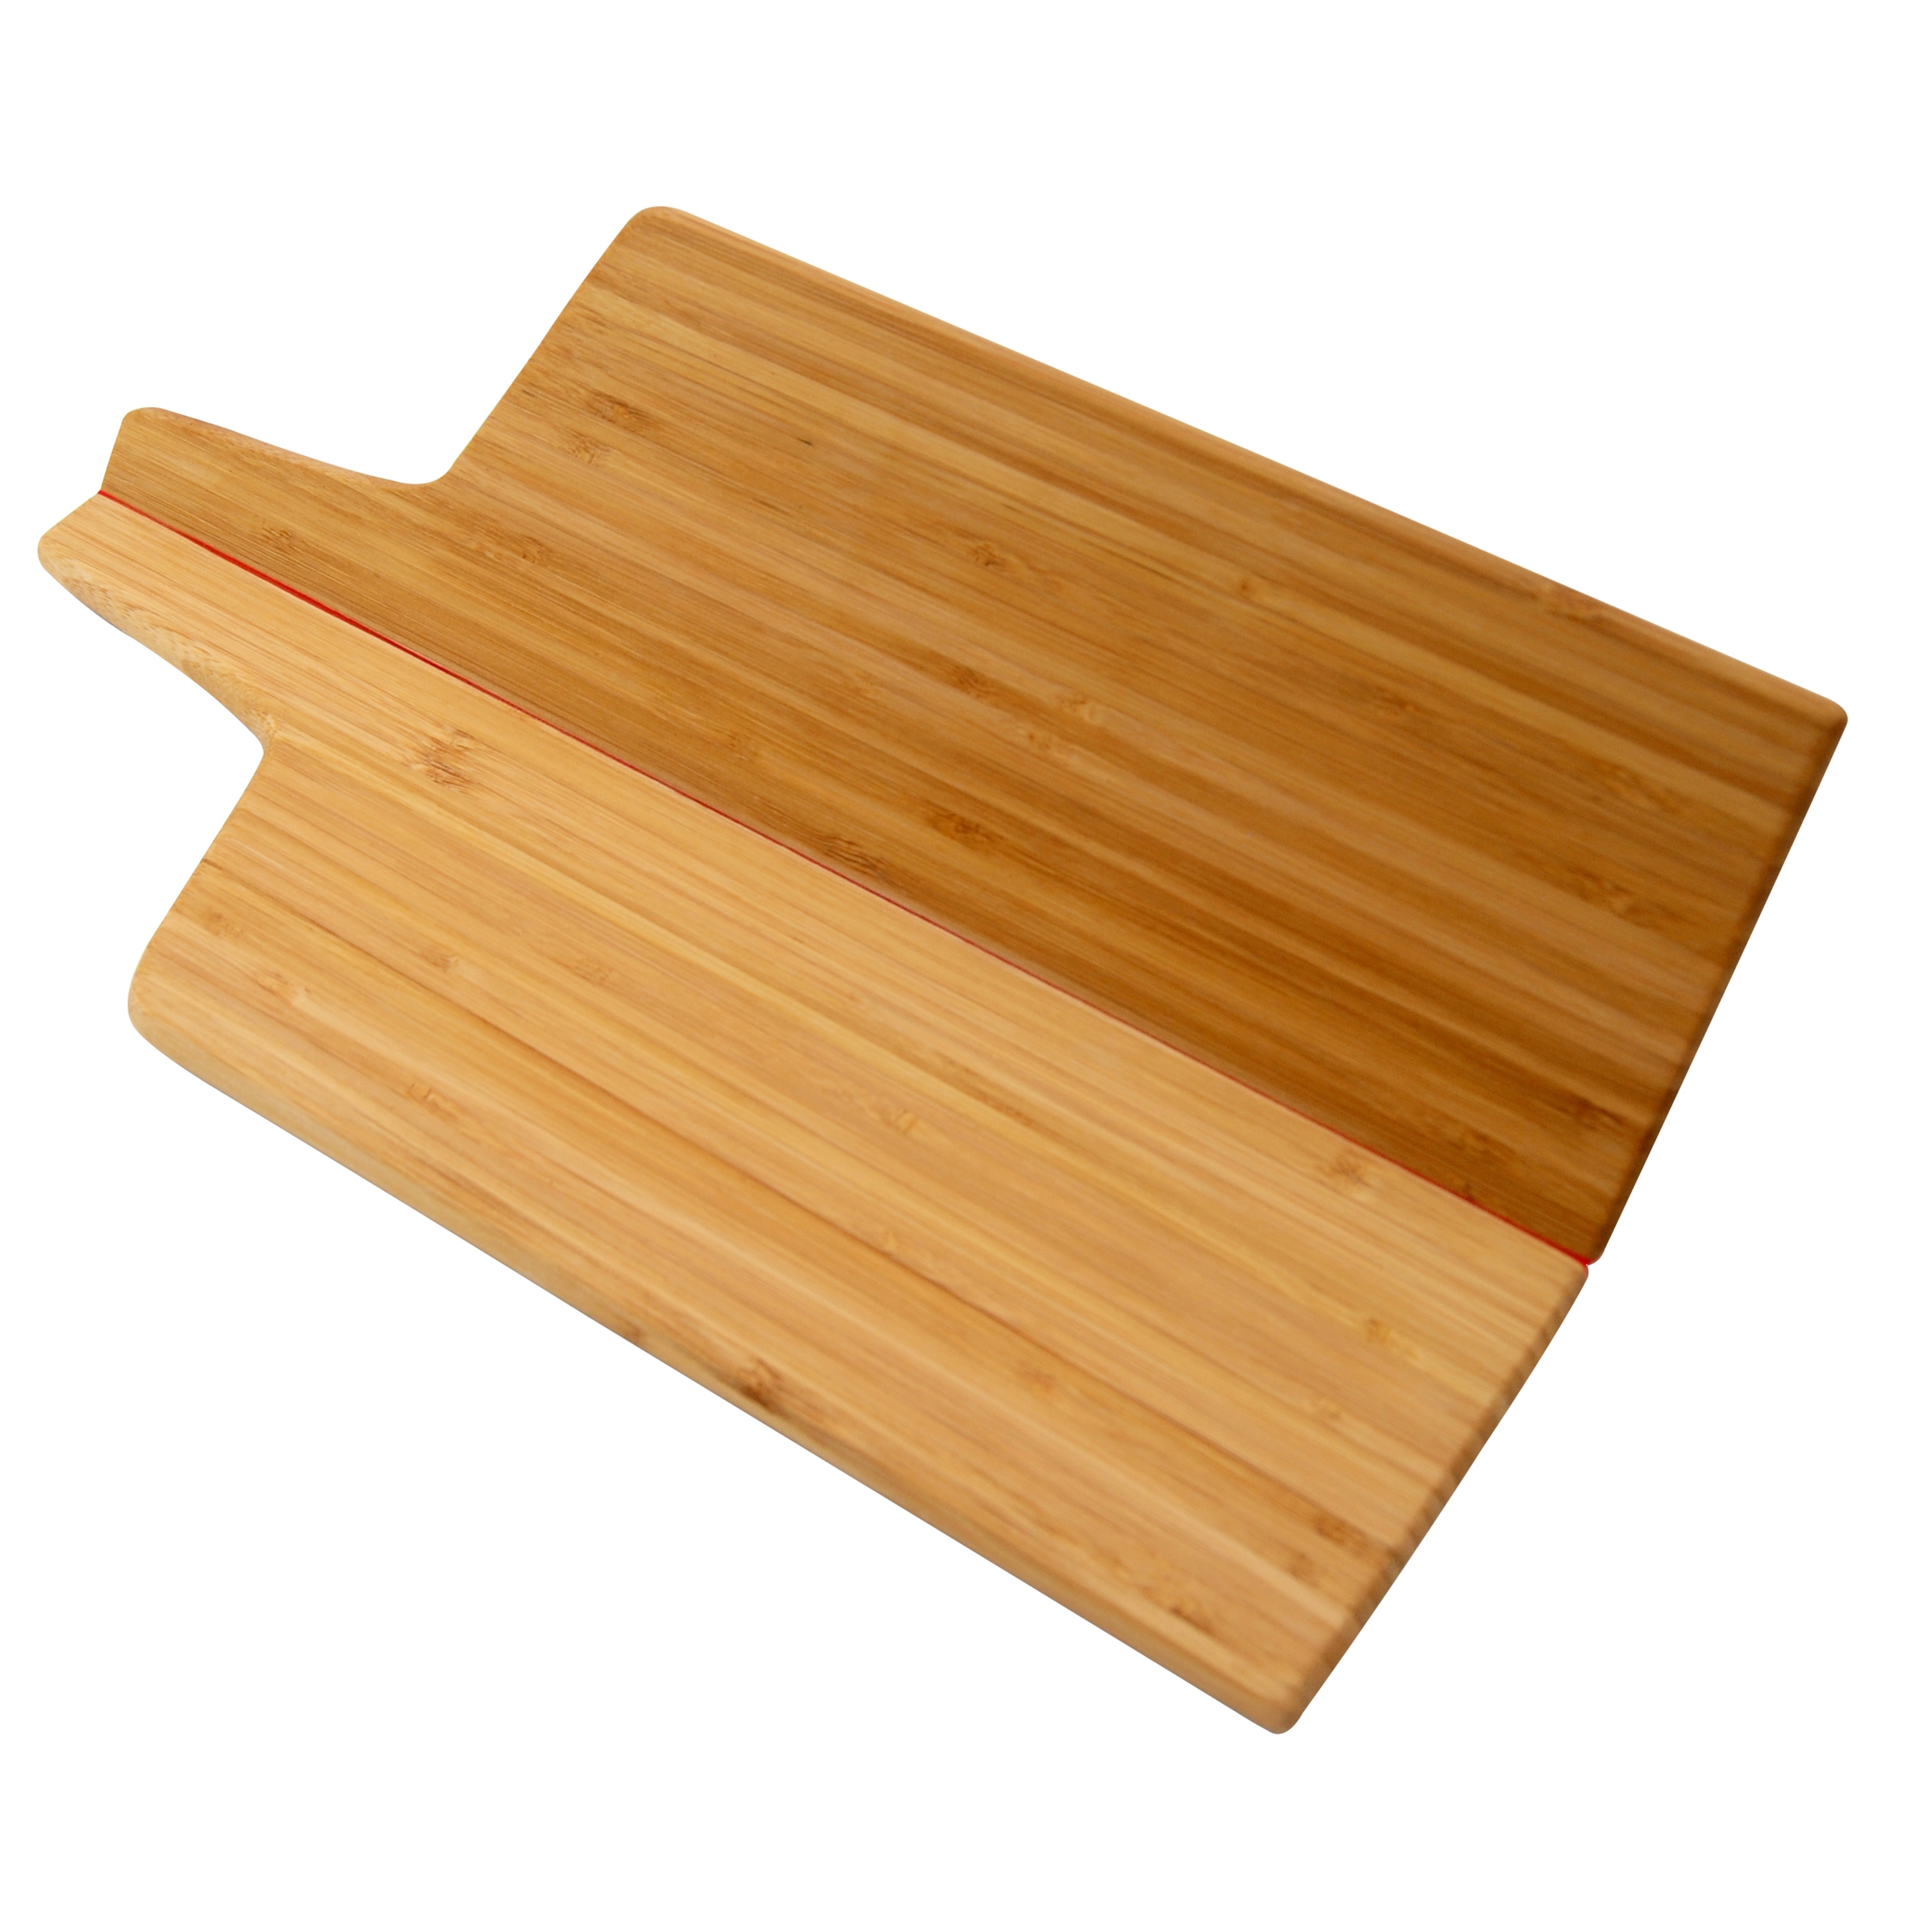 Round Bamboo Cutting Board 11.75